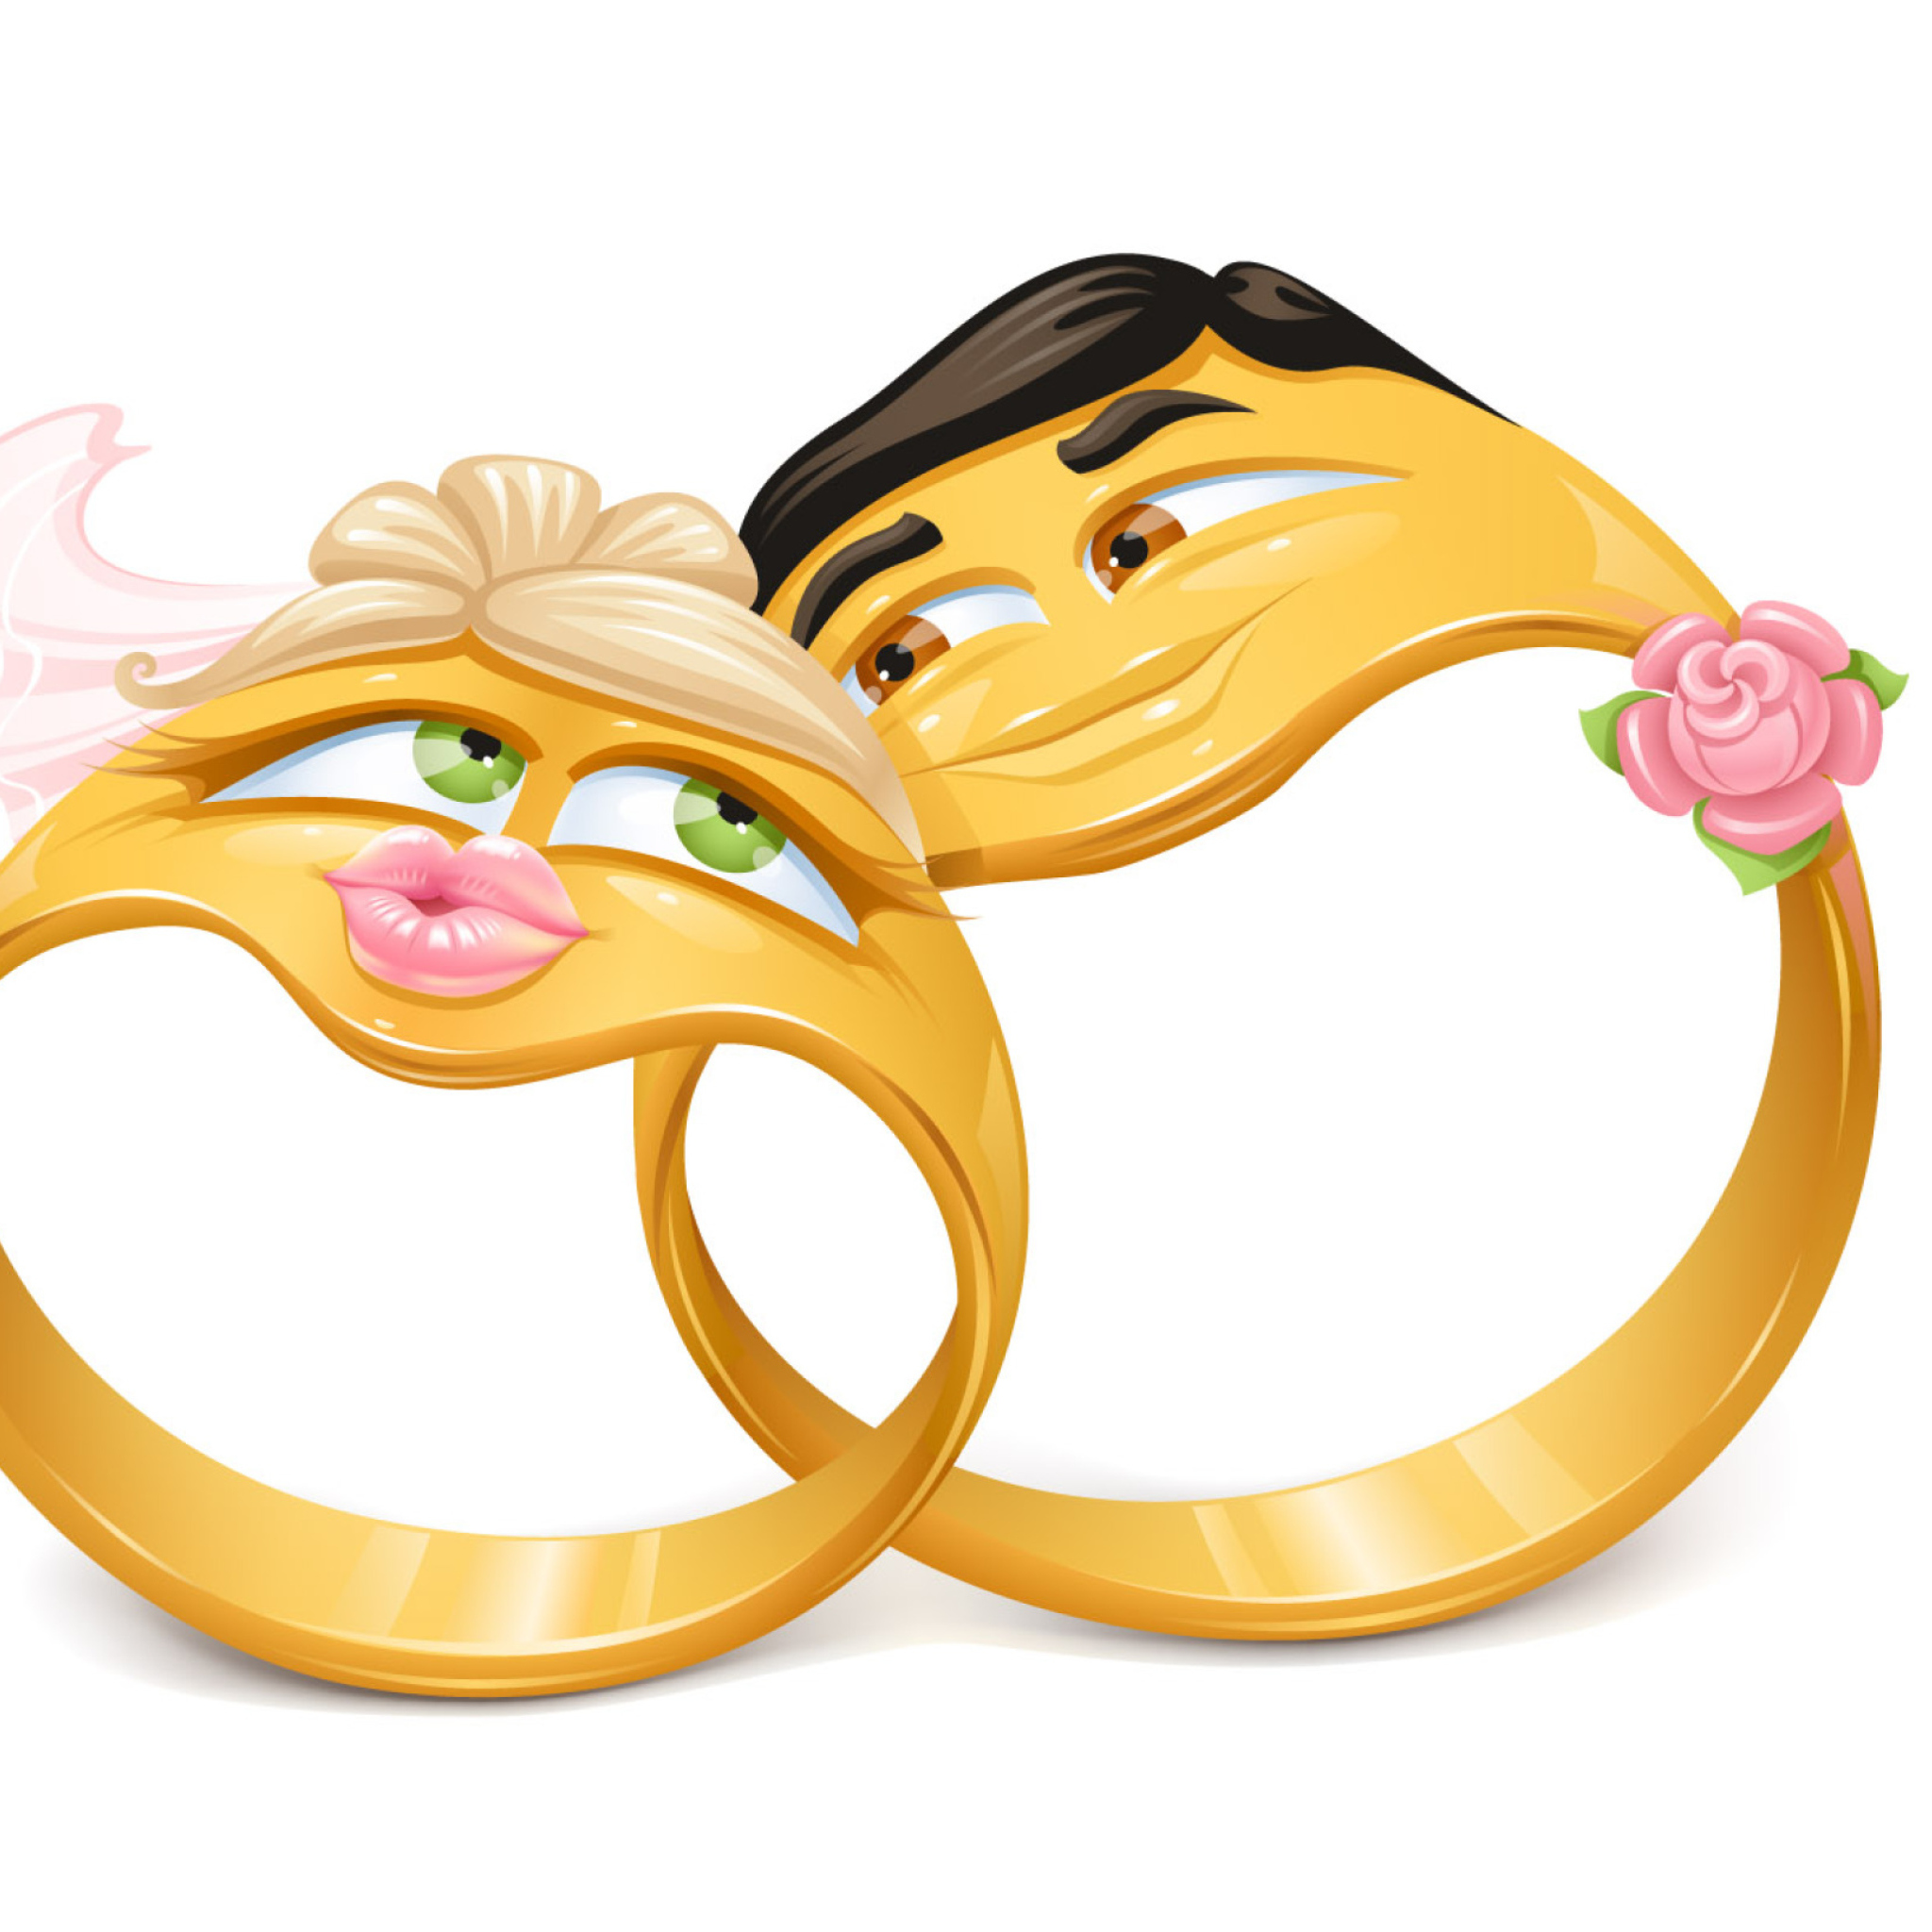 Wedding Ring at Valentines Day wallpaper 2048x2048